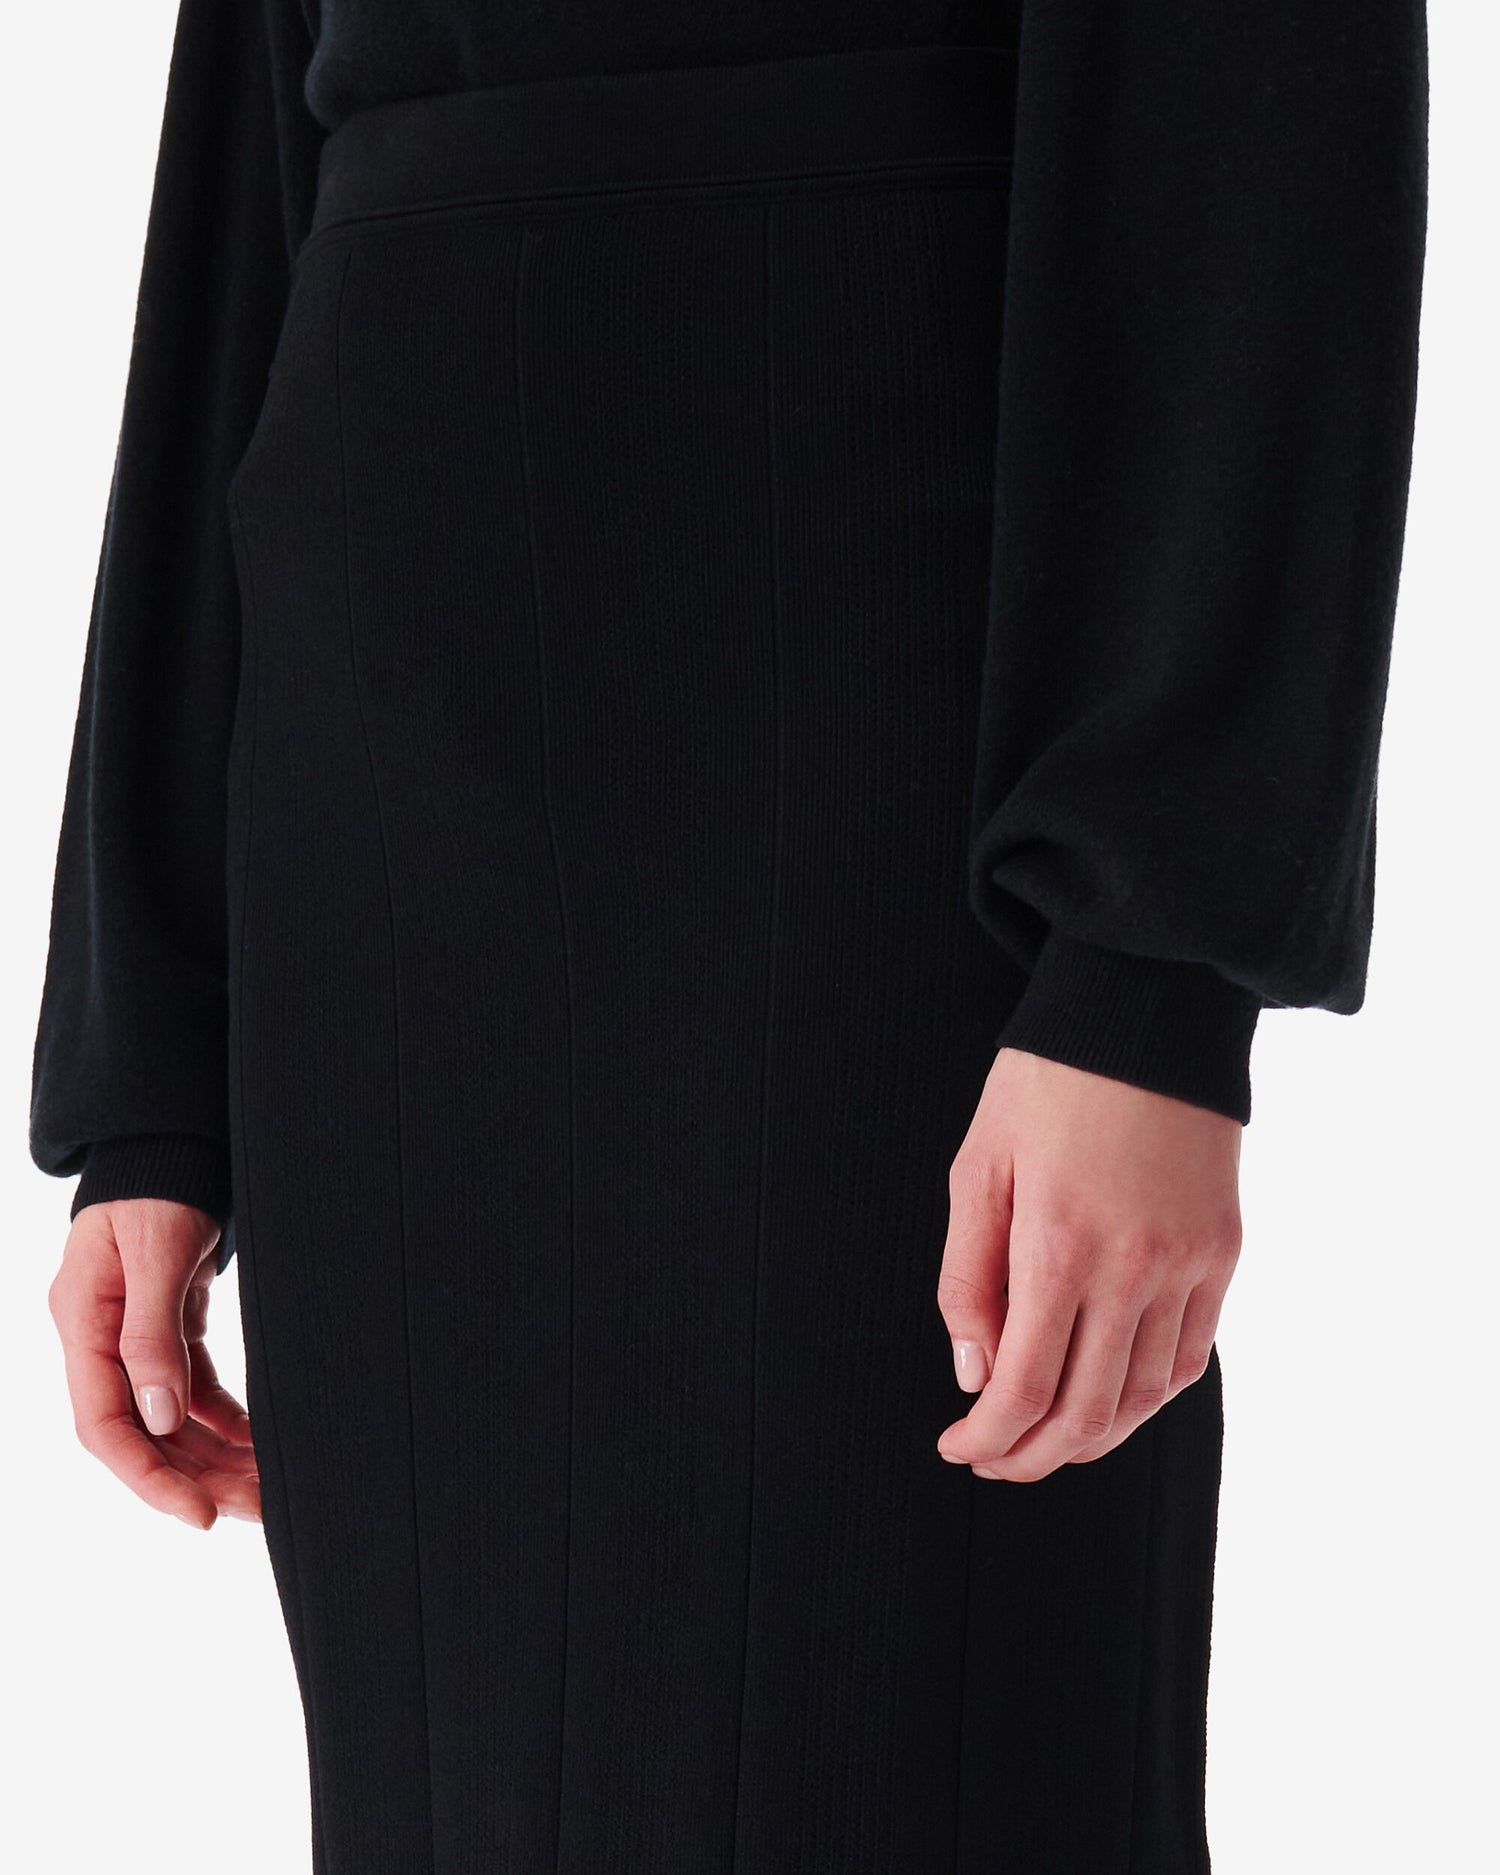 CAIFA knitted skirt, black